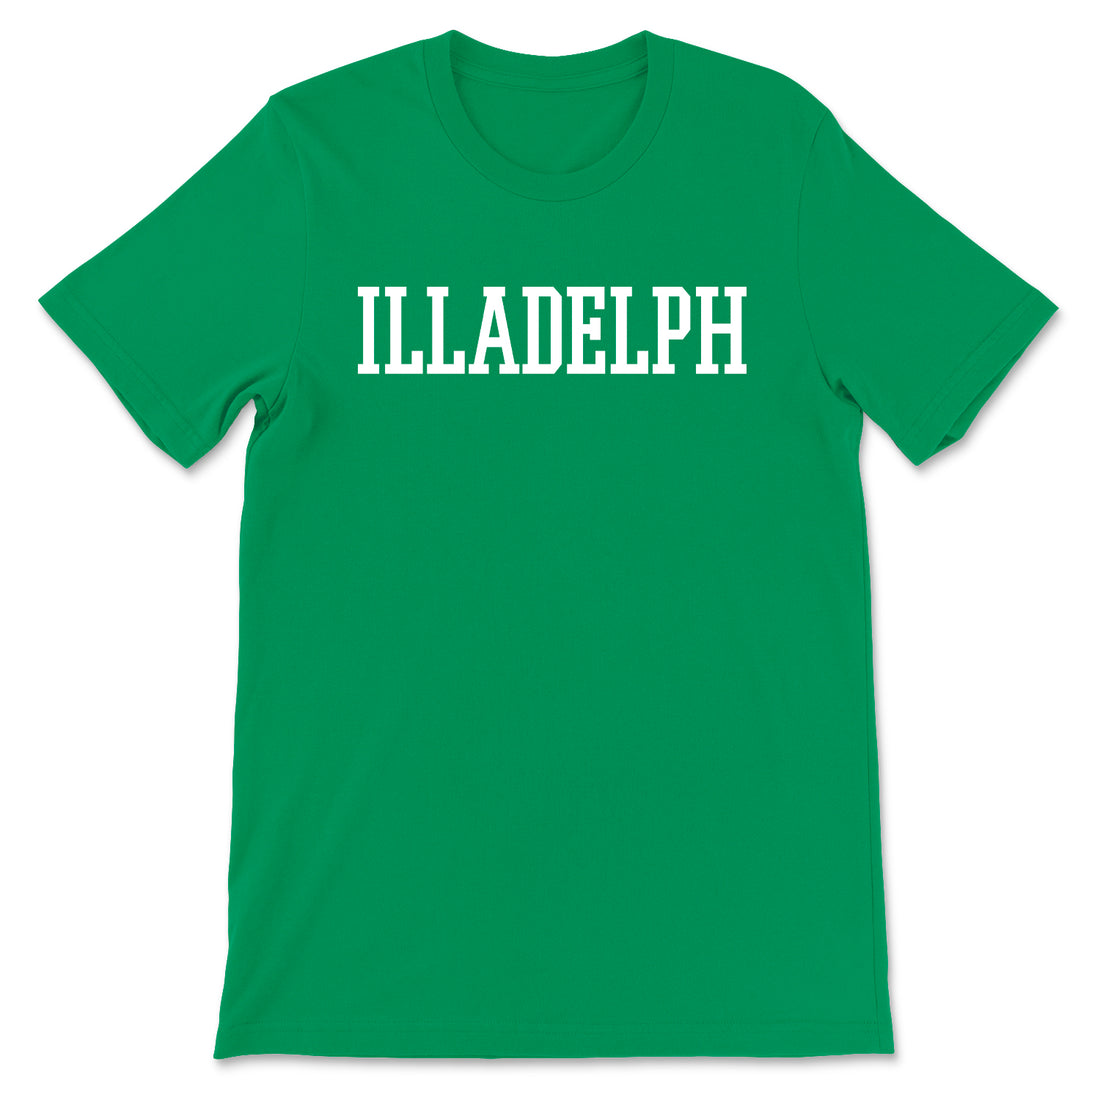 Illadelph Collegiate Green T-Shirt